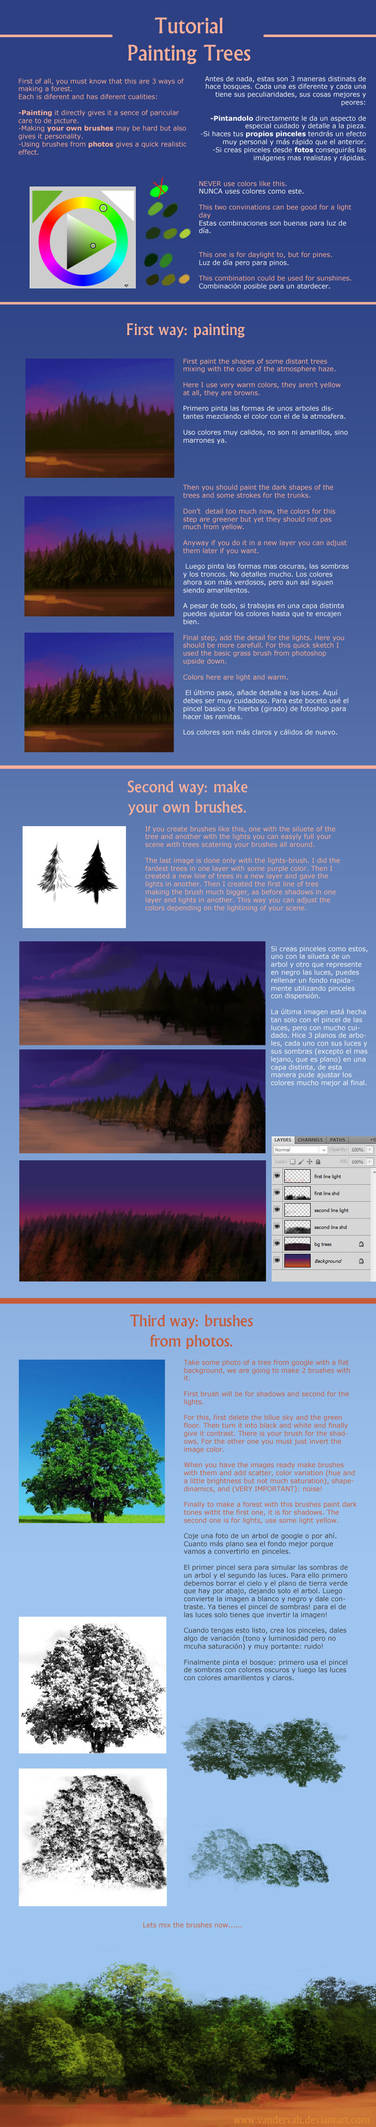 Painting trees tutorial